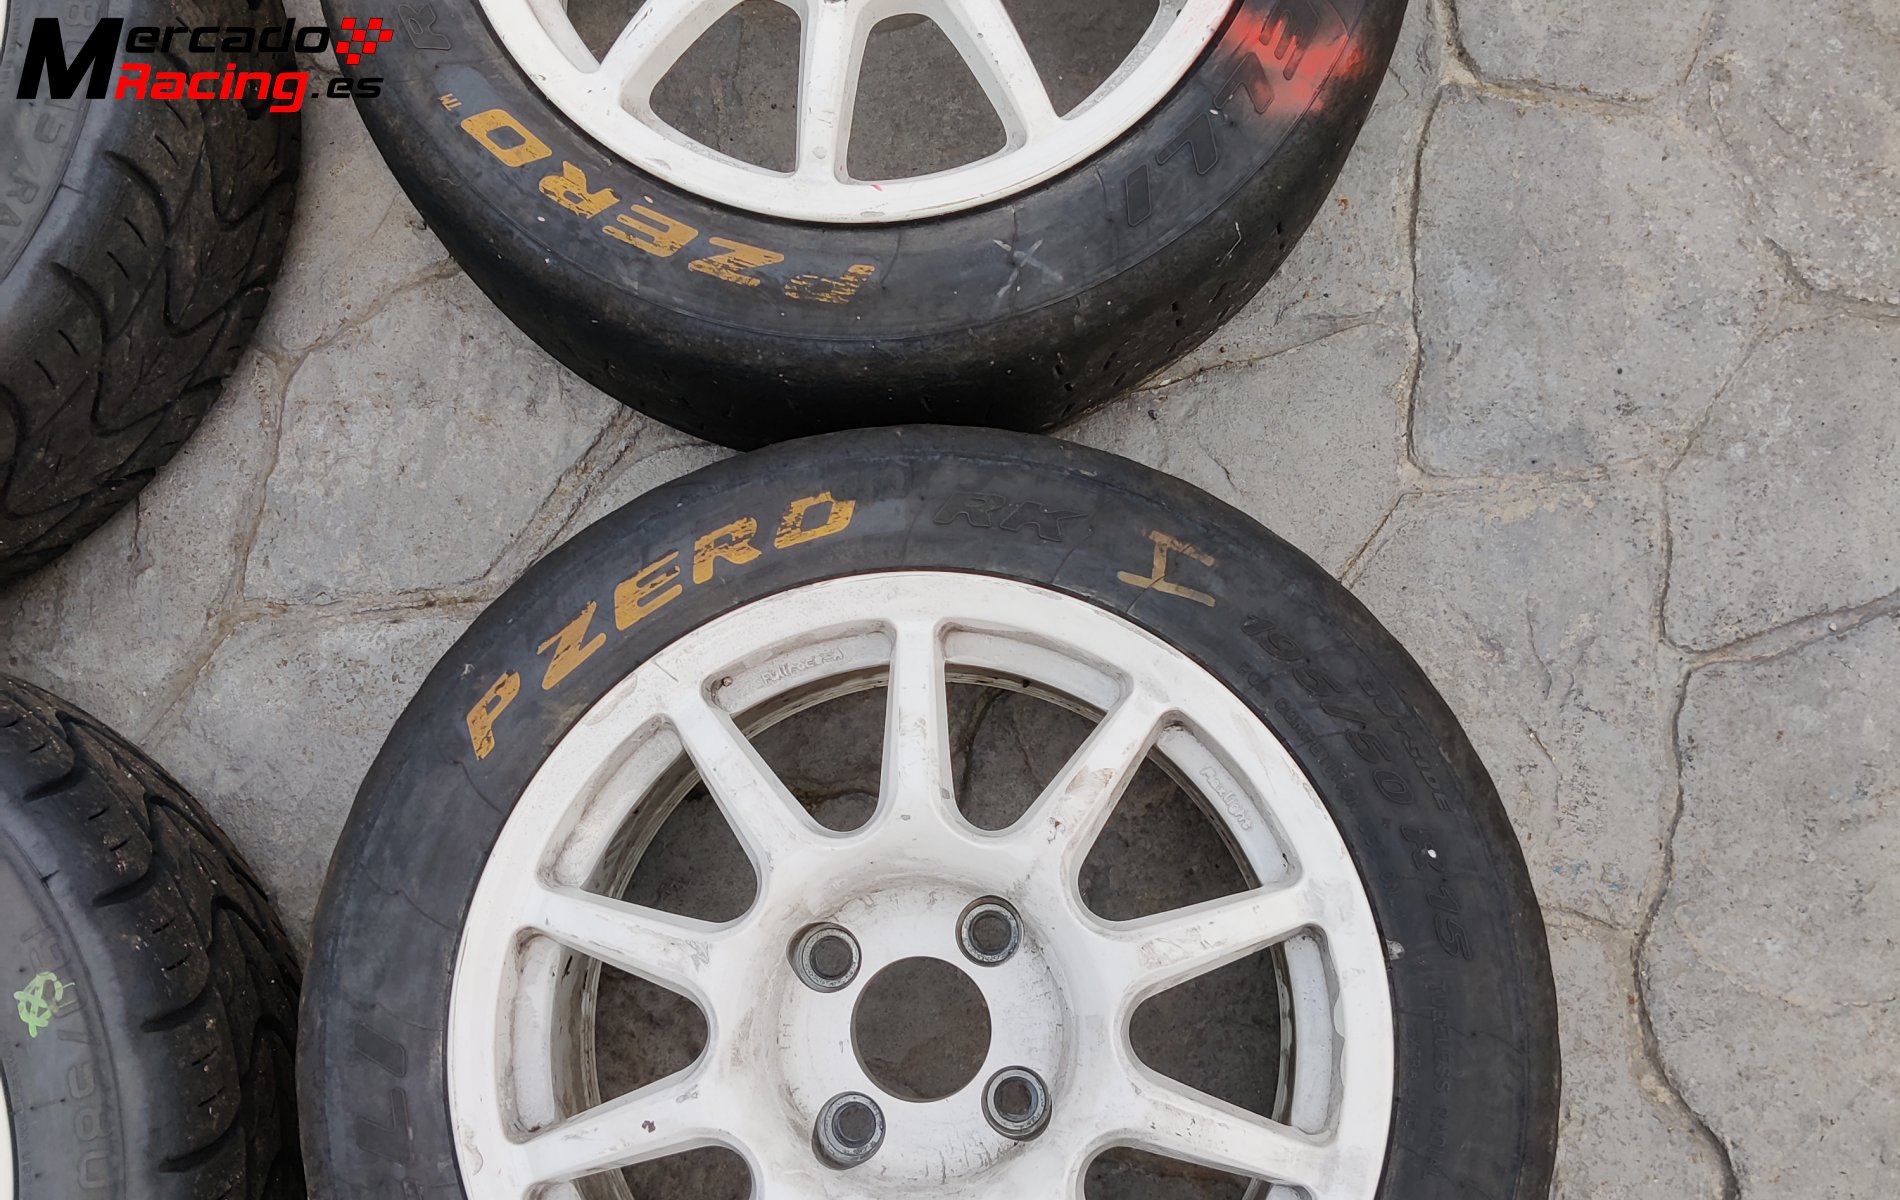 Neumáticos en 15  purelli de competición asfalto rk5 rk7 rk7w n3